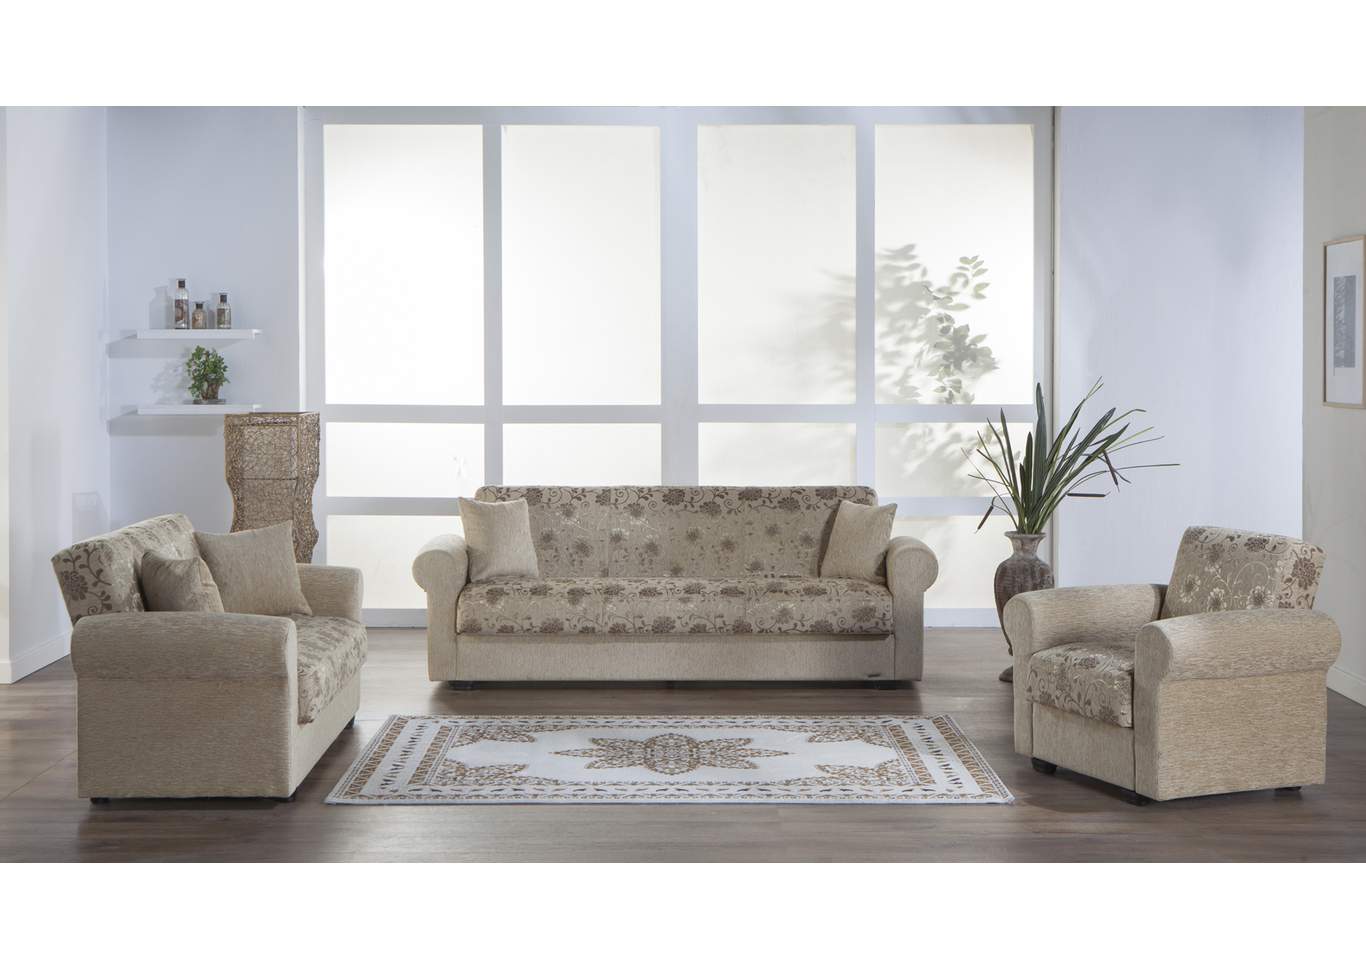 Elita Yasemin Beige 3 Seat Sleeper Sofa,Hudson Furniture & Bedding